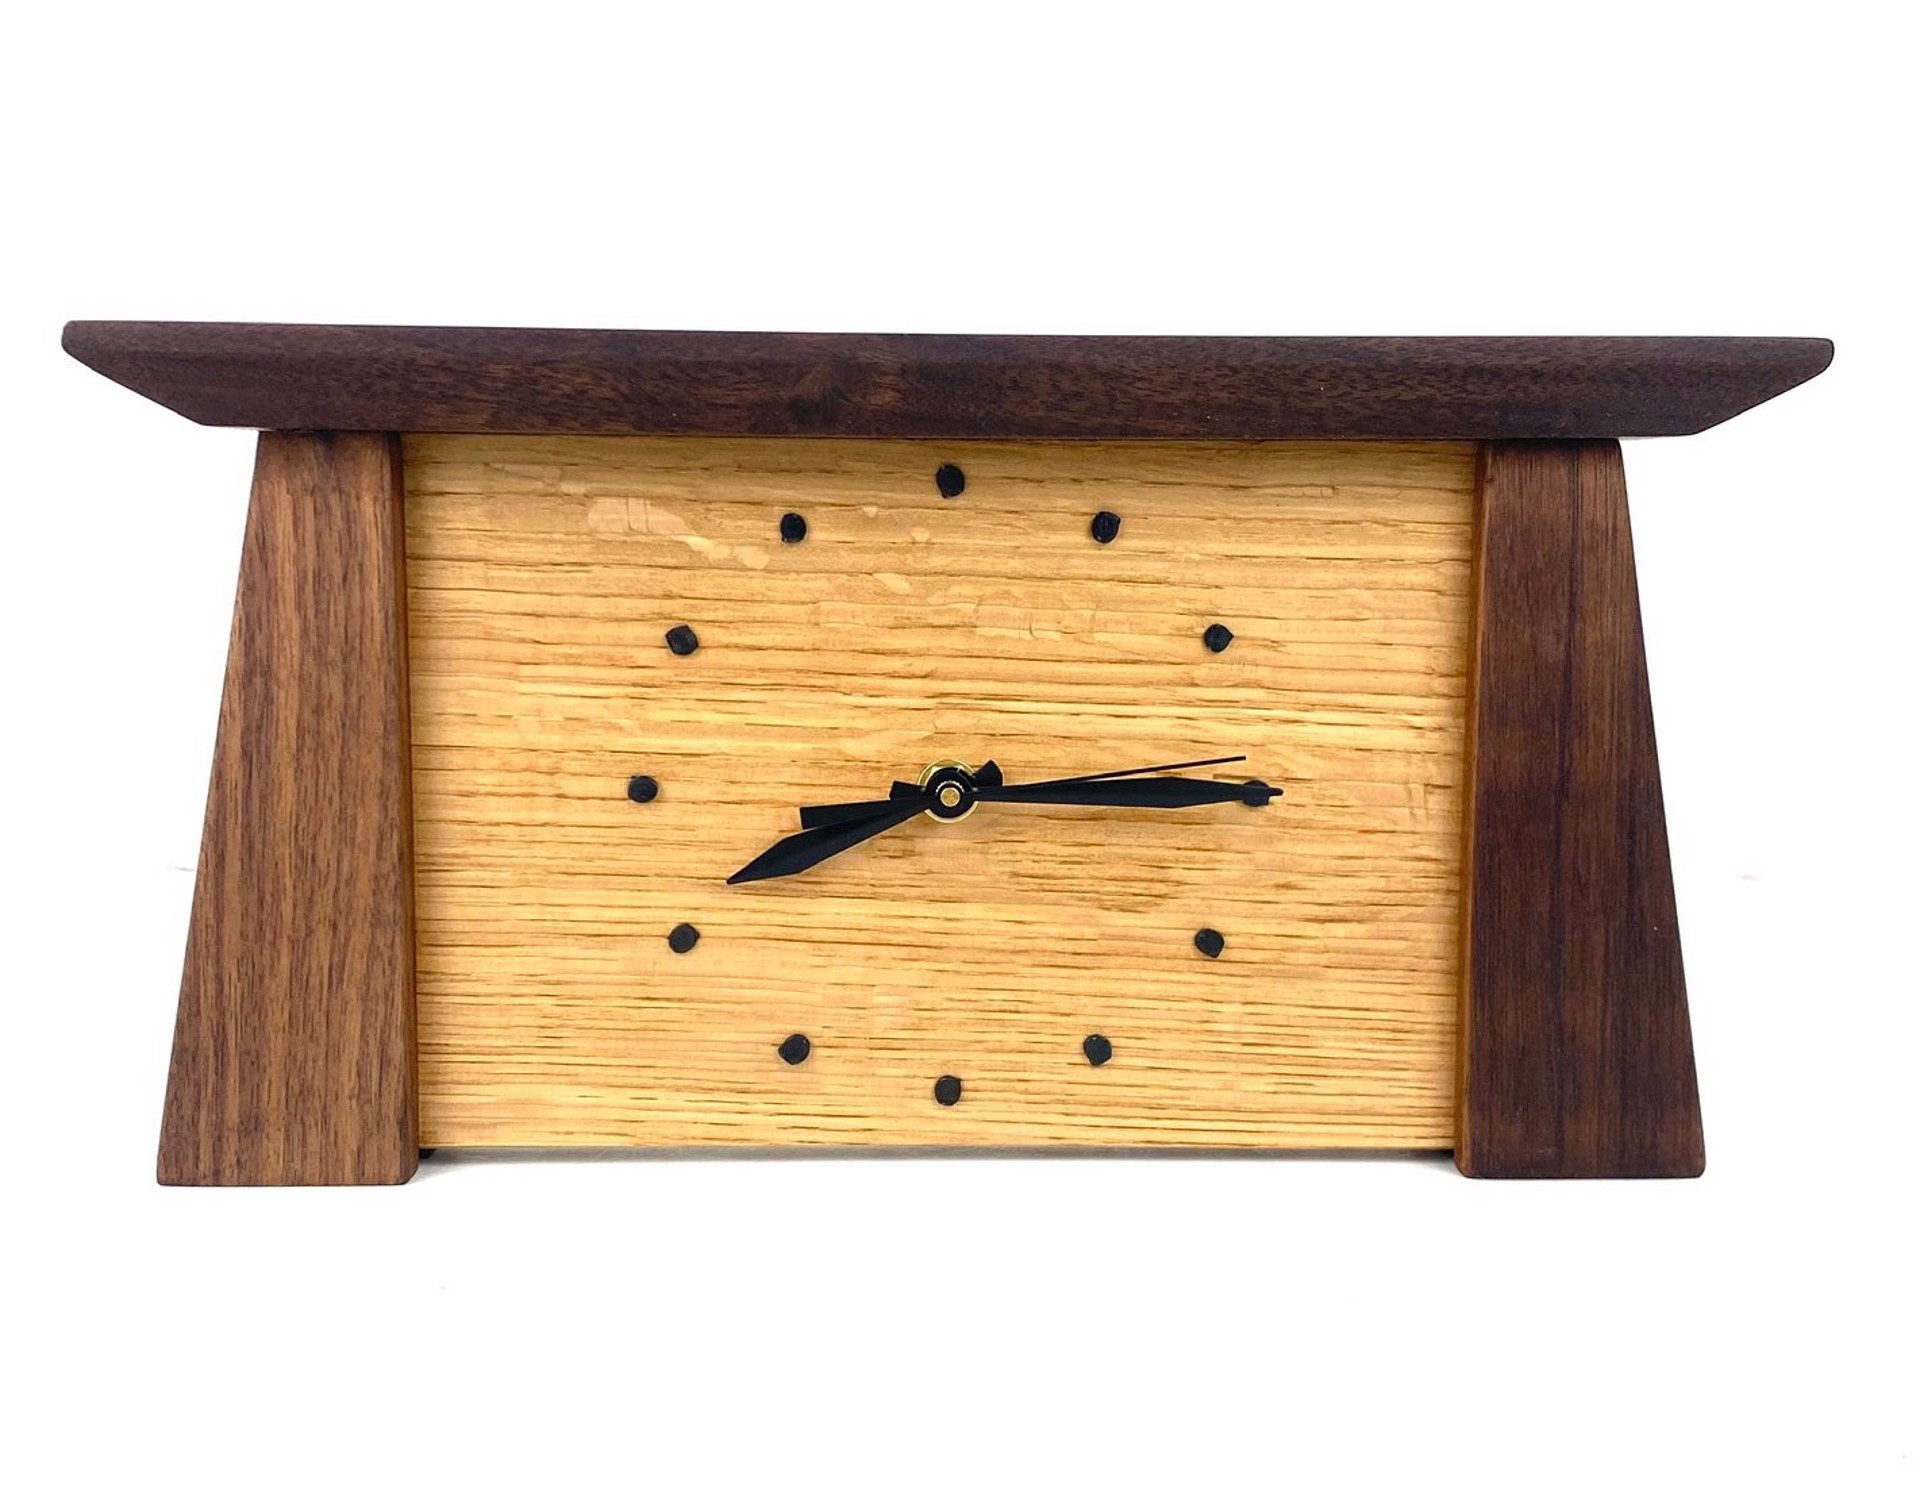 Prairie Mantel Clock in Walnut and Oak by Sabbath Day Woods